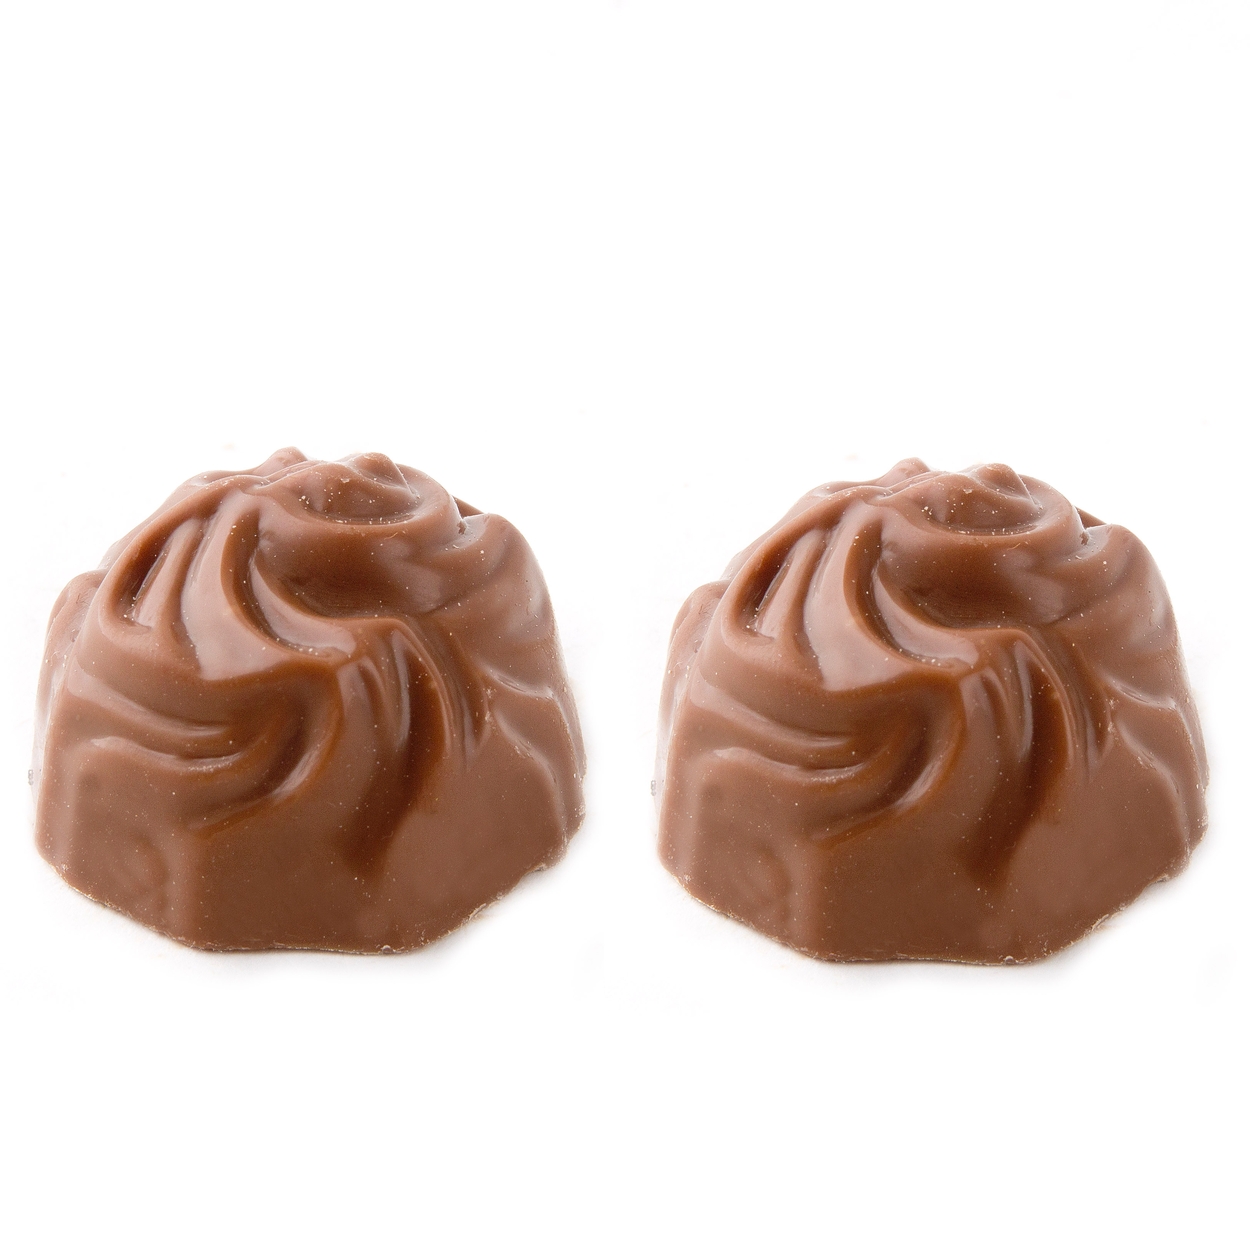 Chocolate Dulce de Leche Truffles Recipe